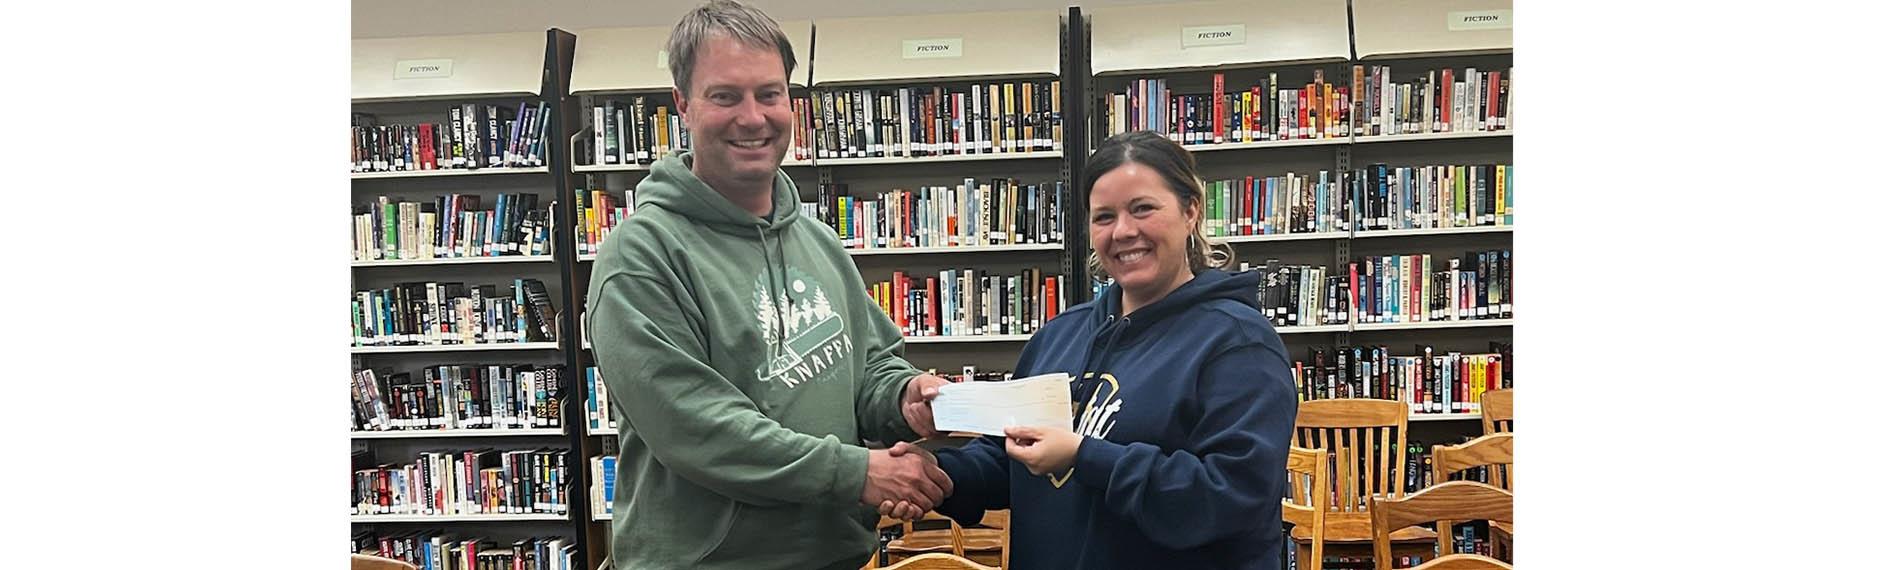 Hampton Lumber donates $20,000 to Knappa Forestry program, and shop teacher Mr. Rathfron receives check.